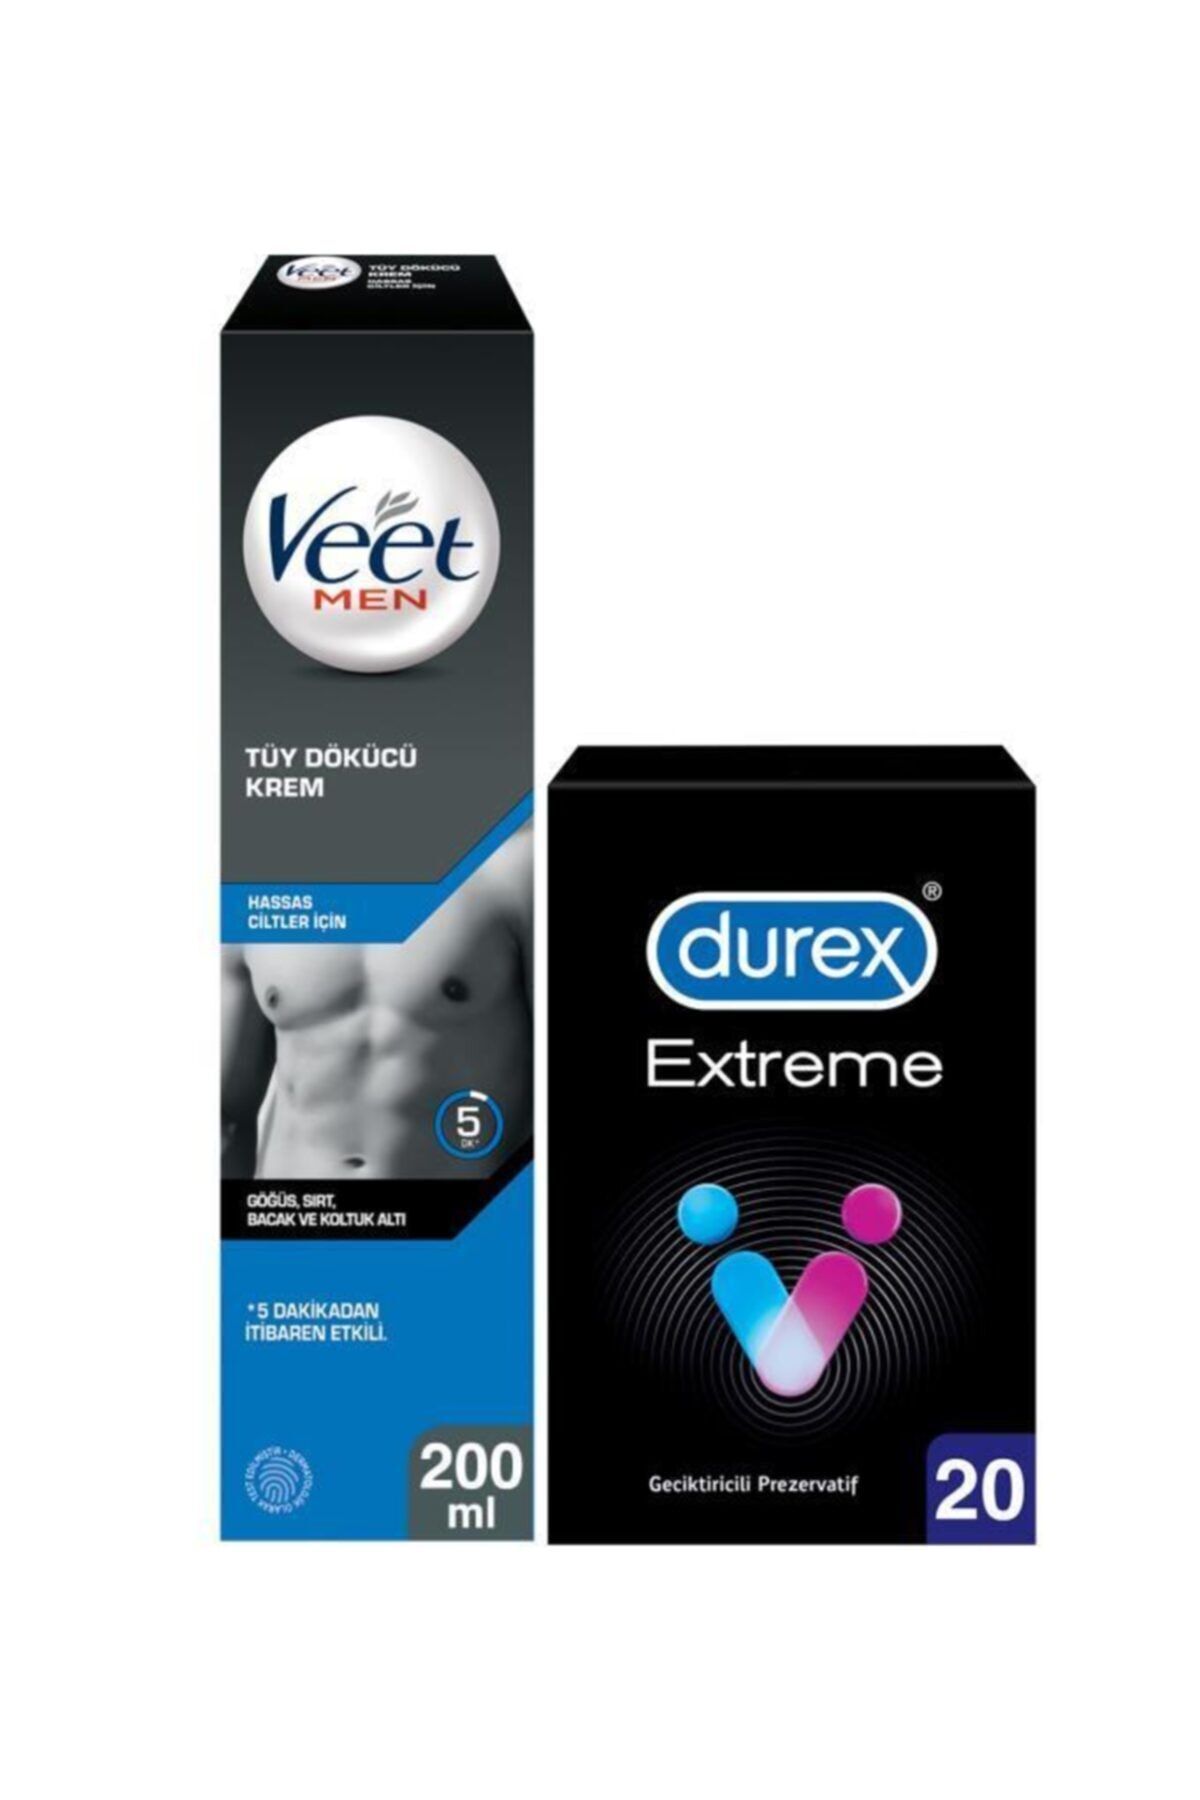 Veet Hassas Erkeklere Özel Tüy Dökücü Krem 200ml+durex Extreme Geciktiricili Prezervatif 20’li